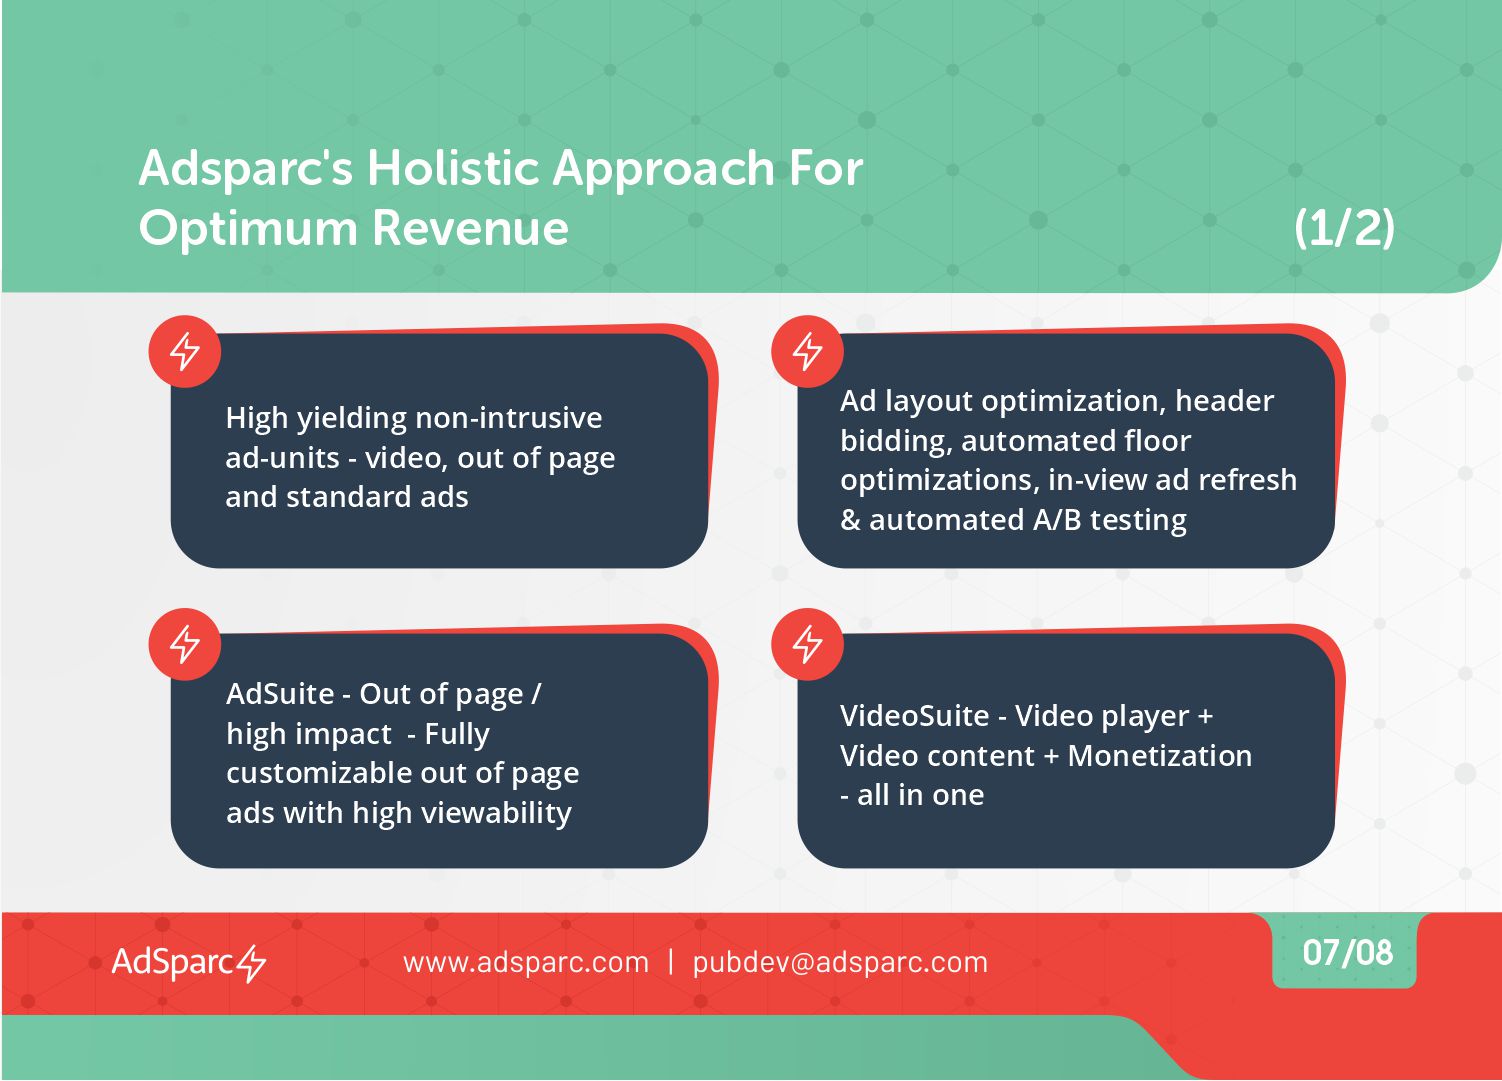 AdSparc Holistic Approach for Optimum Revenue - 1